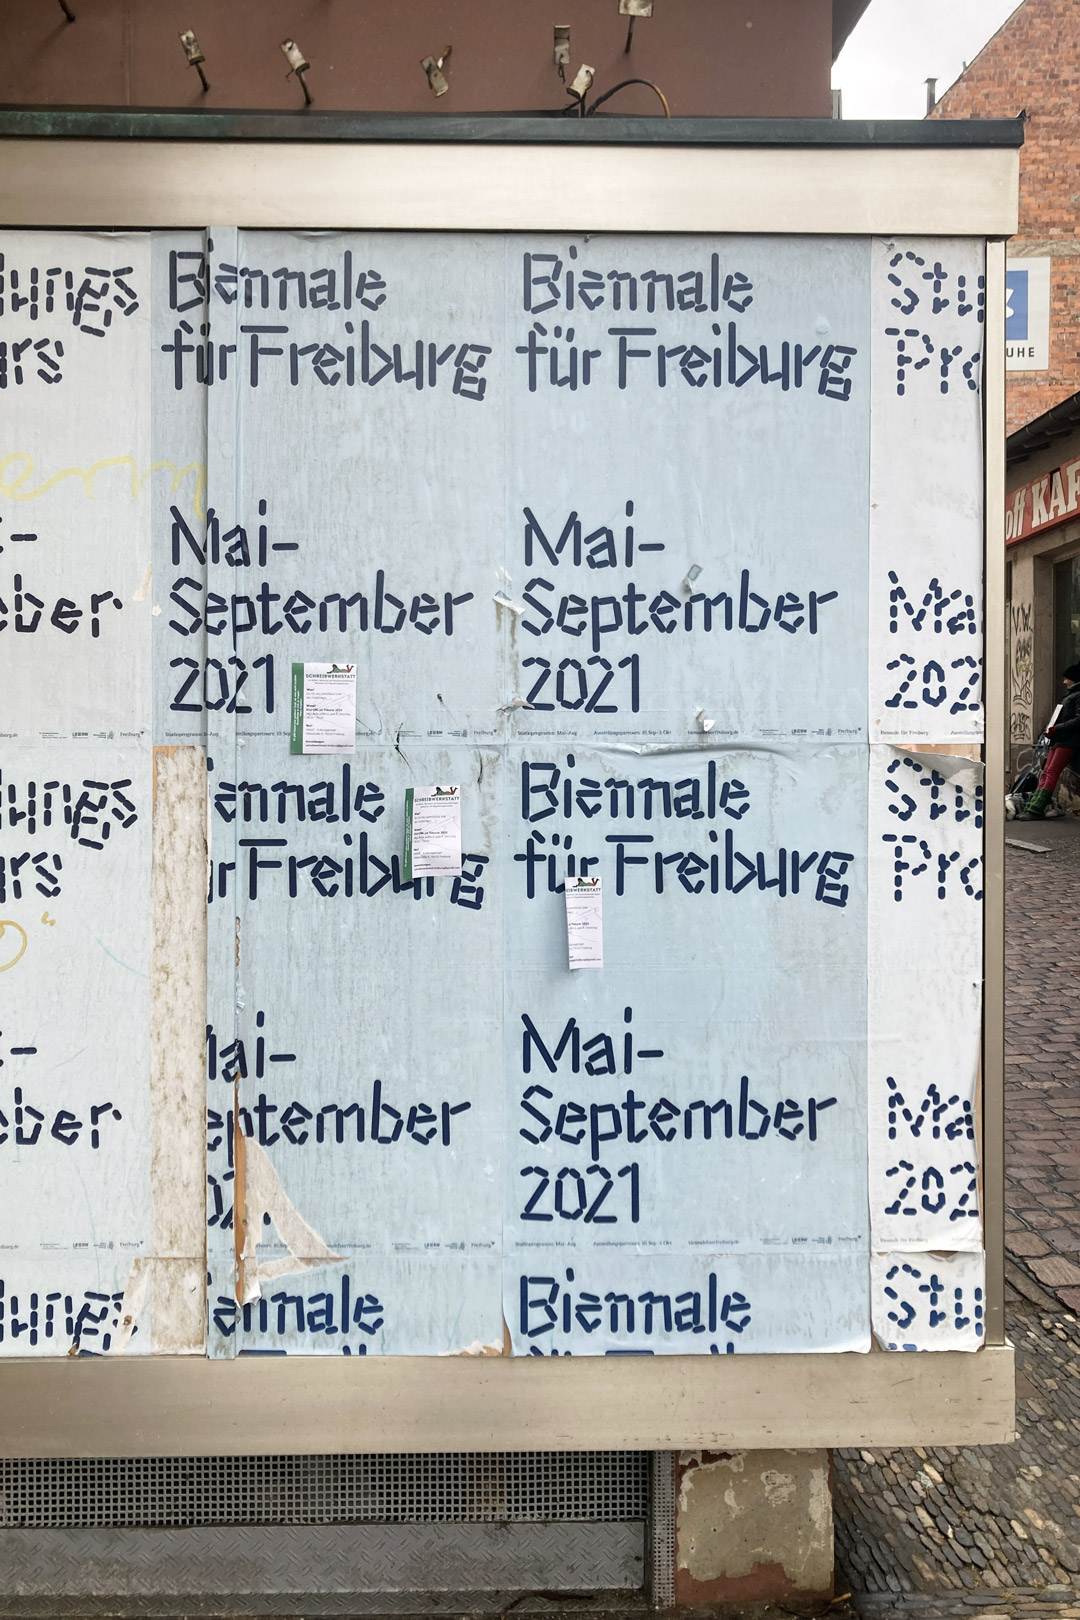 Biennale für Freiburg, 2021, visual identity and campaign designed by Marius Schwarz and Ronja Andersen